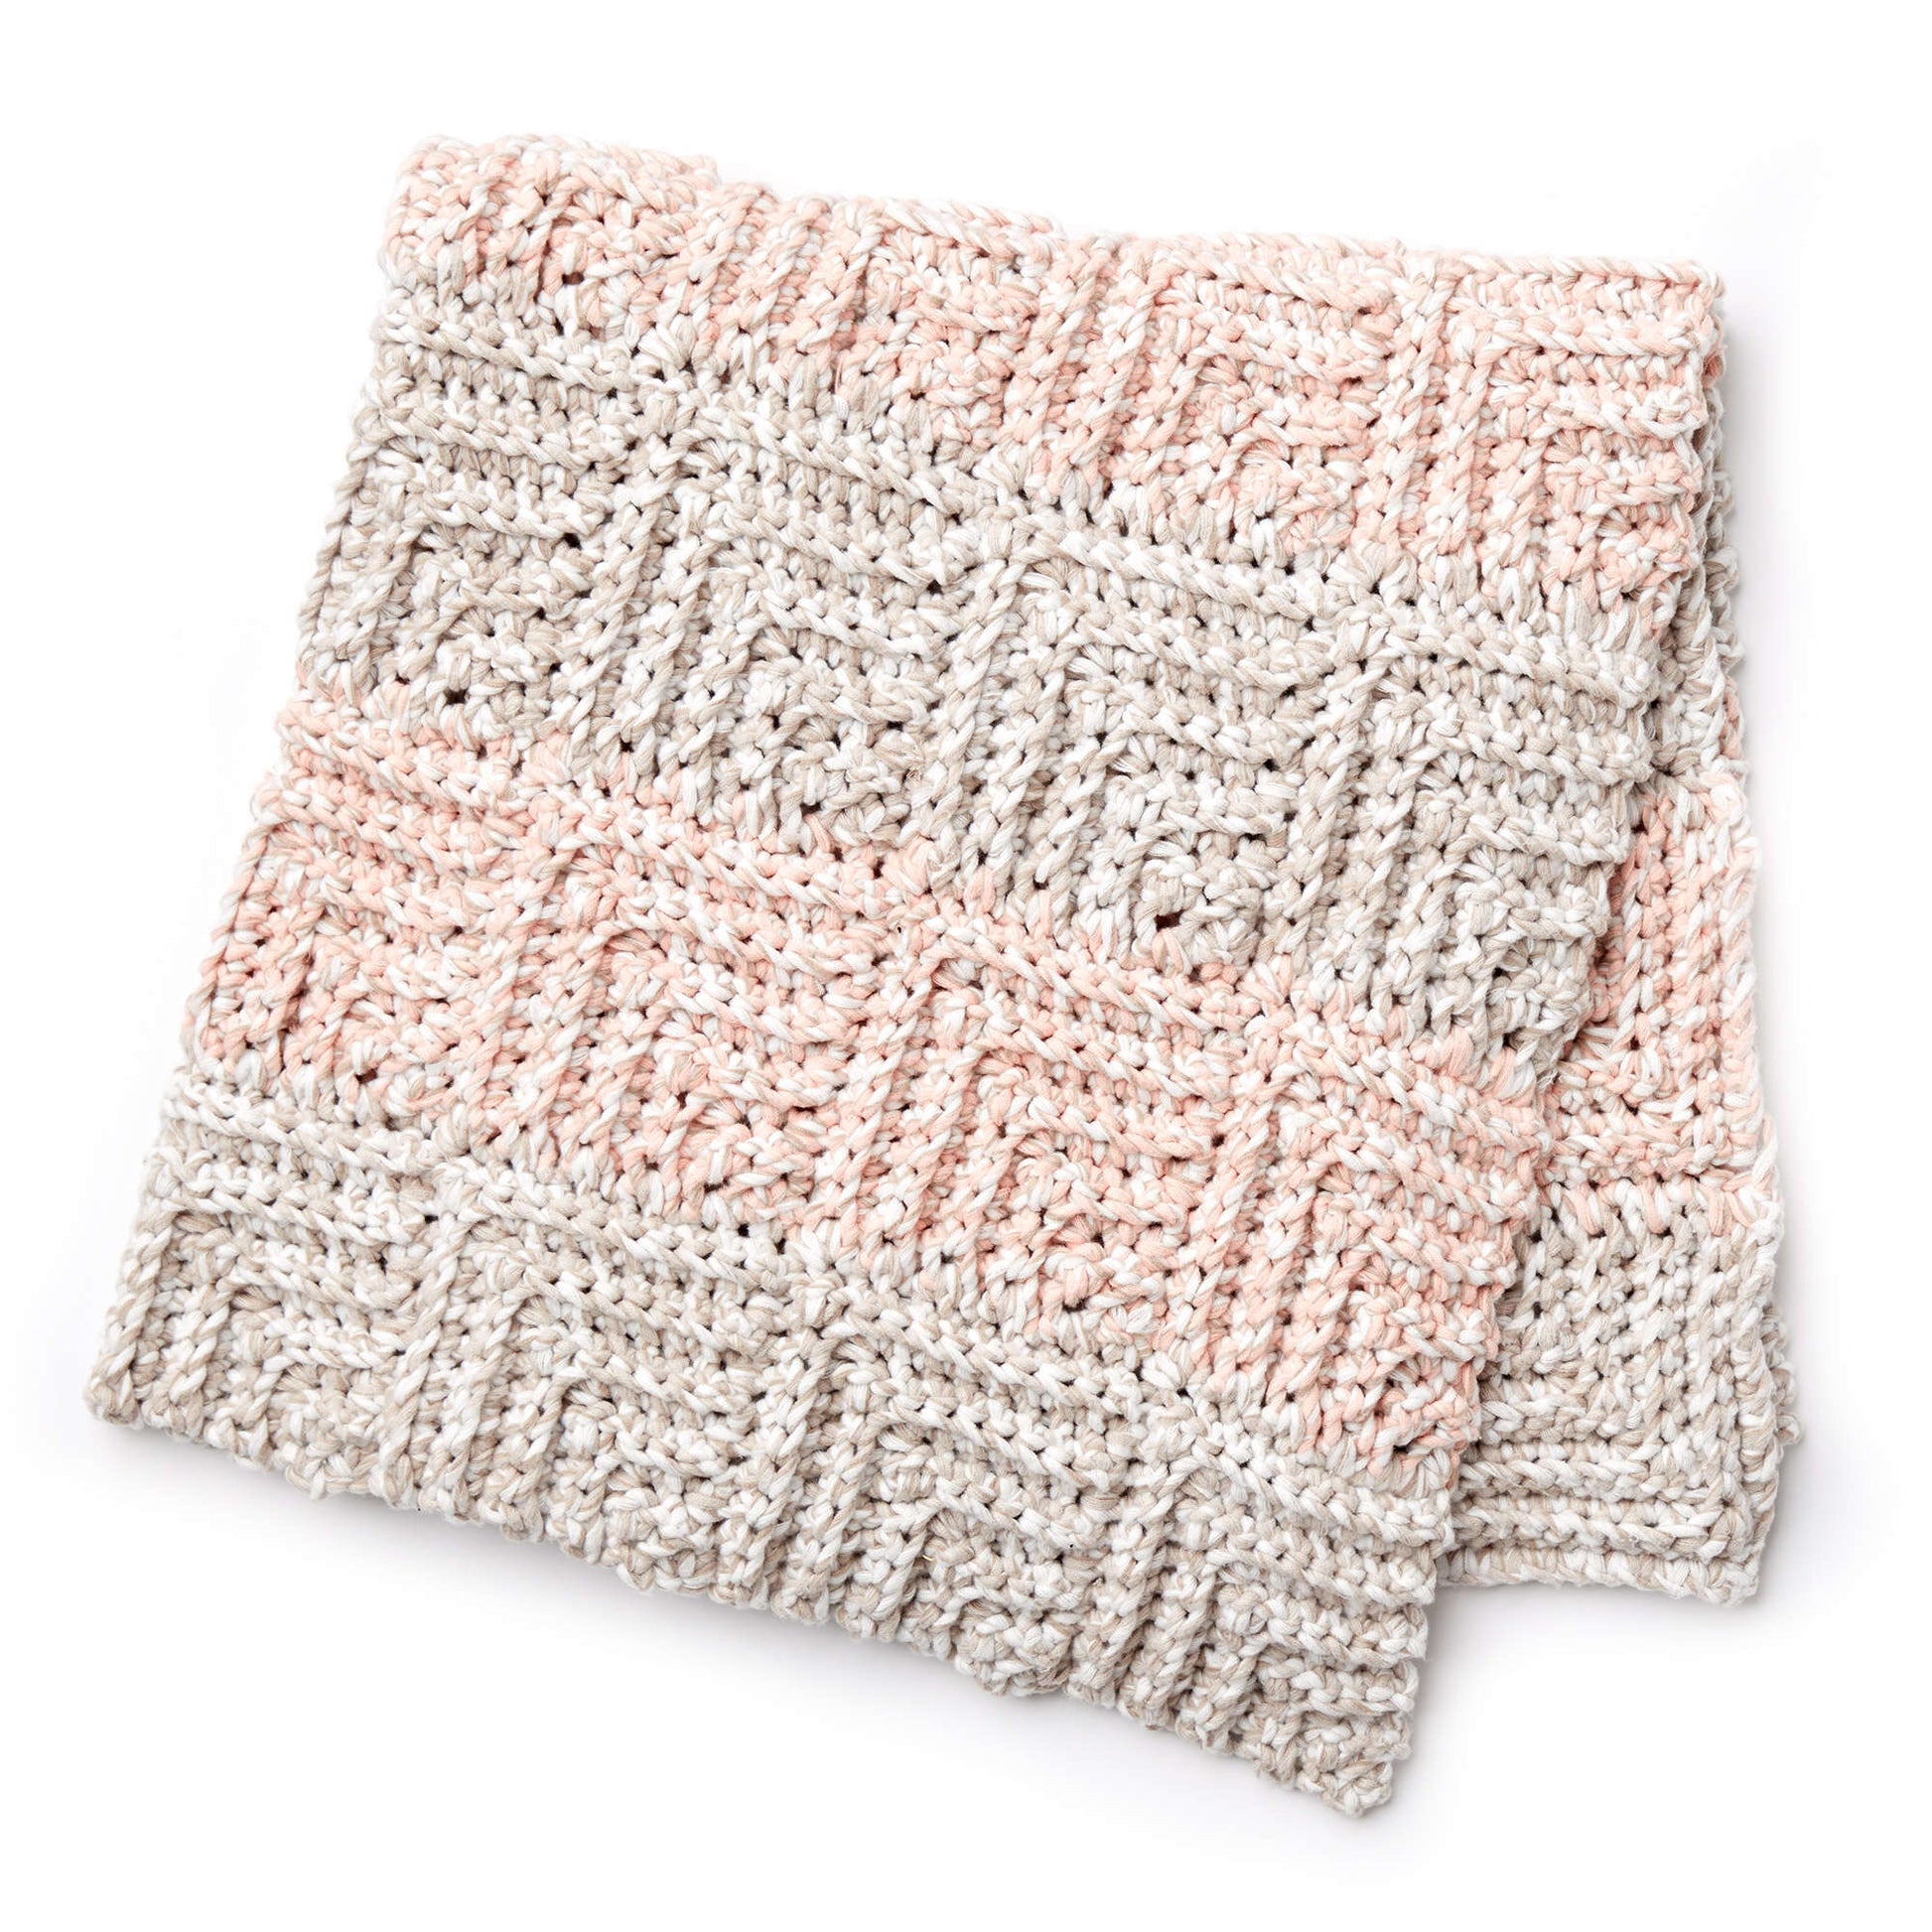 Bernat Mitered Crochet Blanket Crochet Blanket made in Bernat Baby Marly yarn